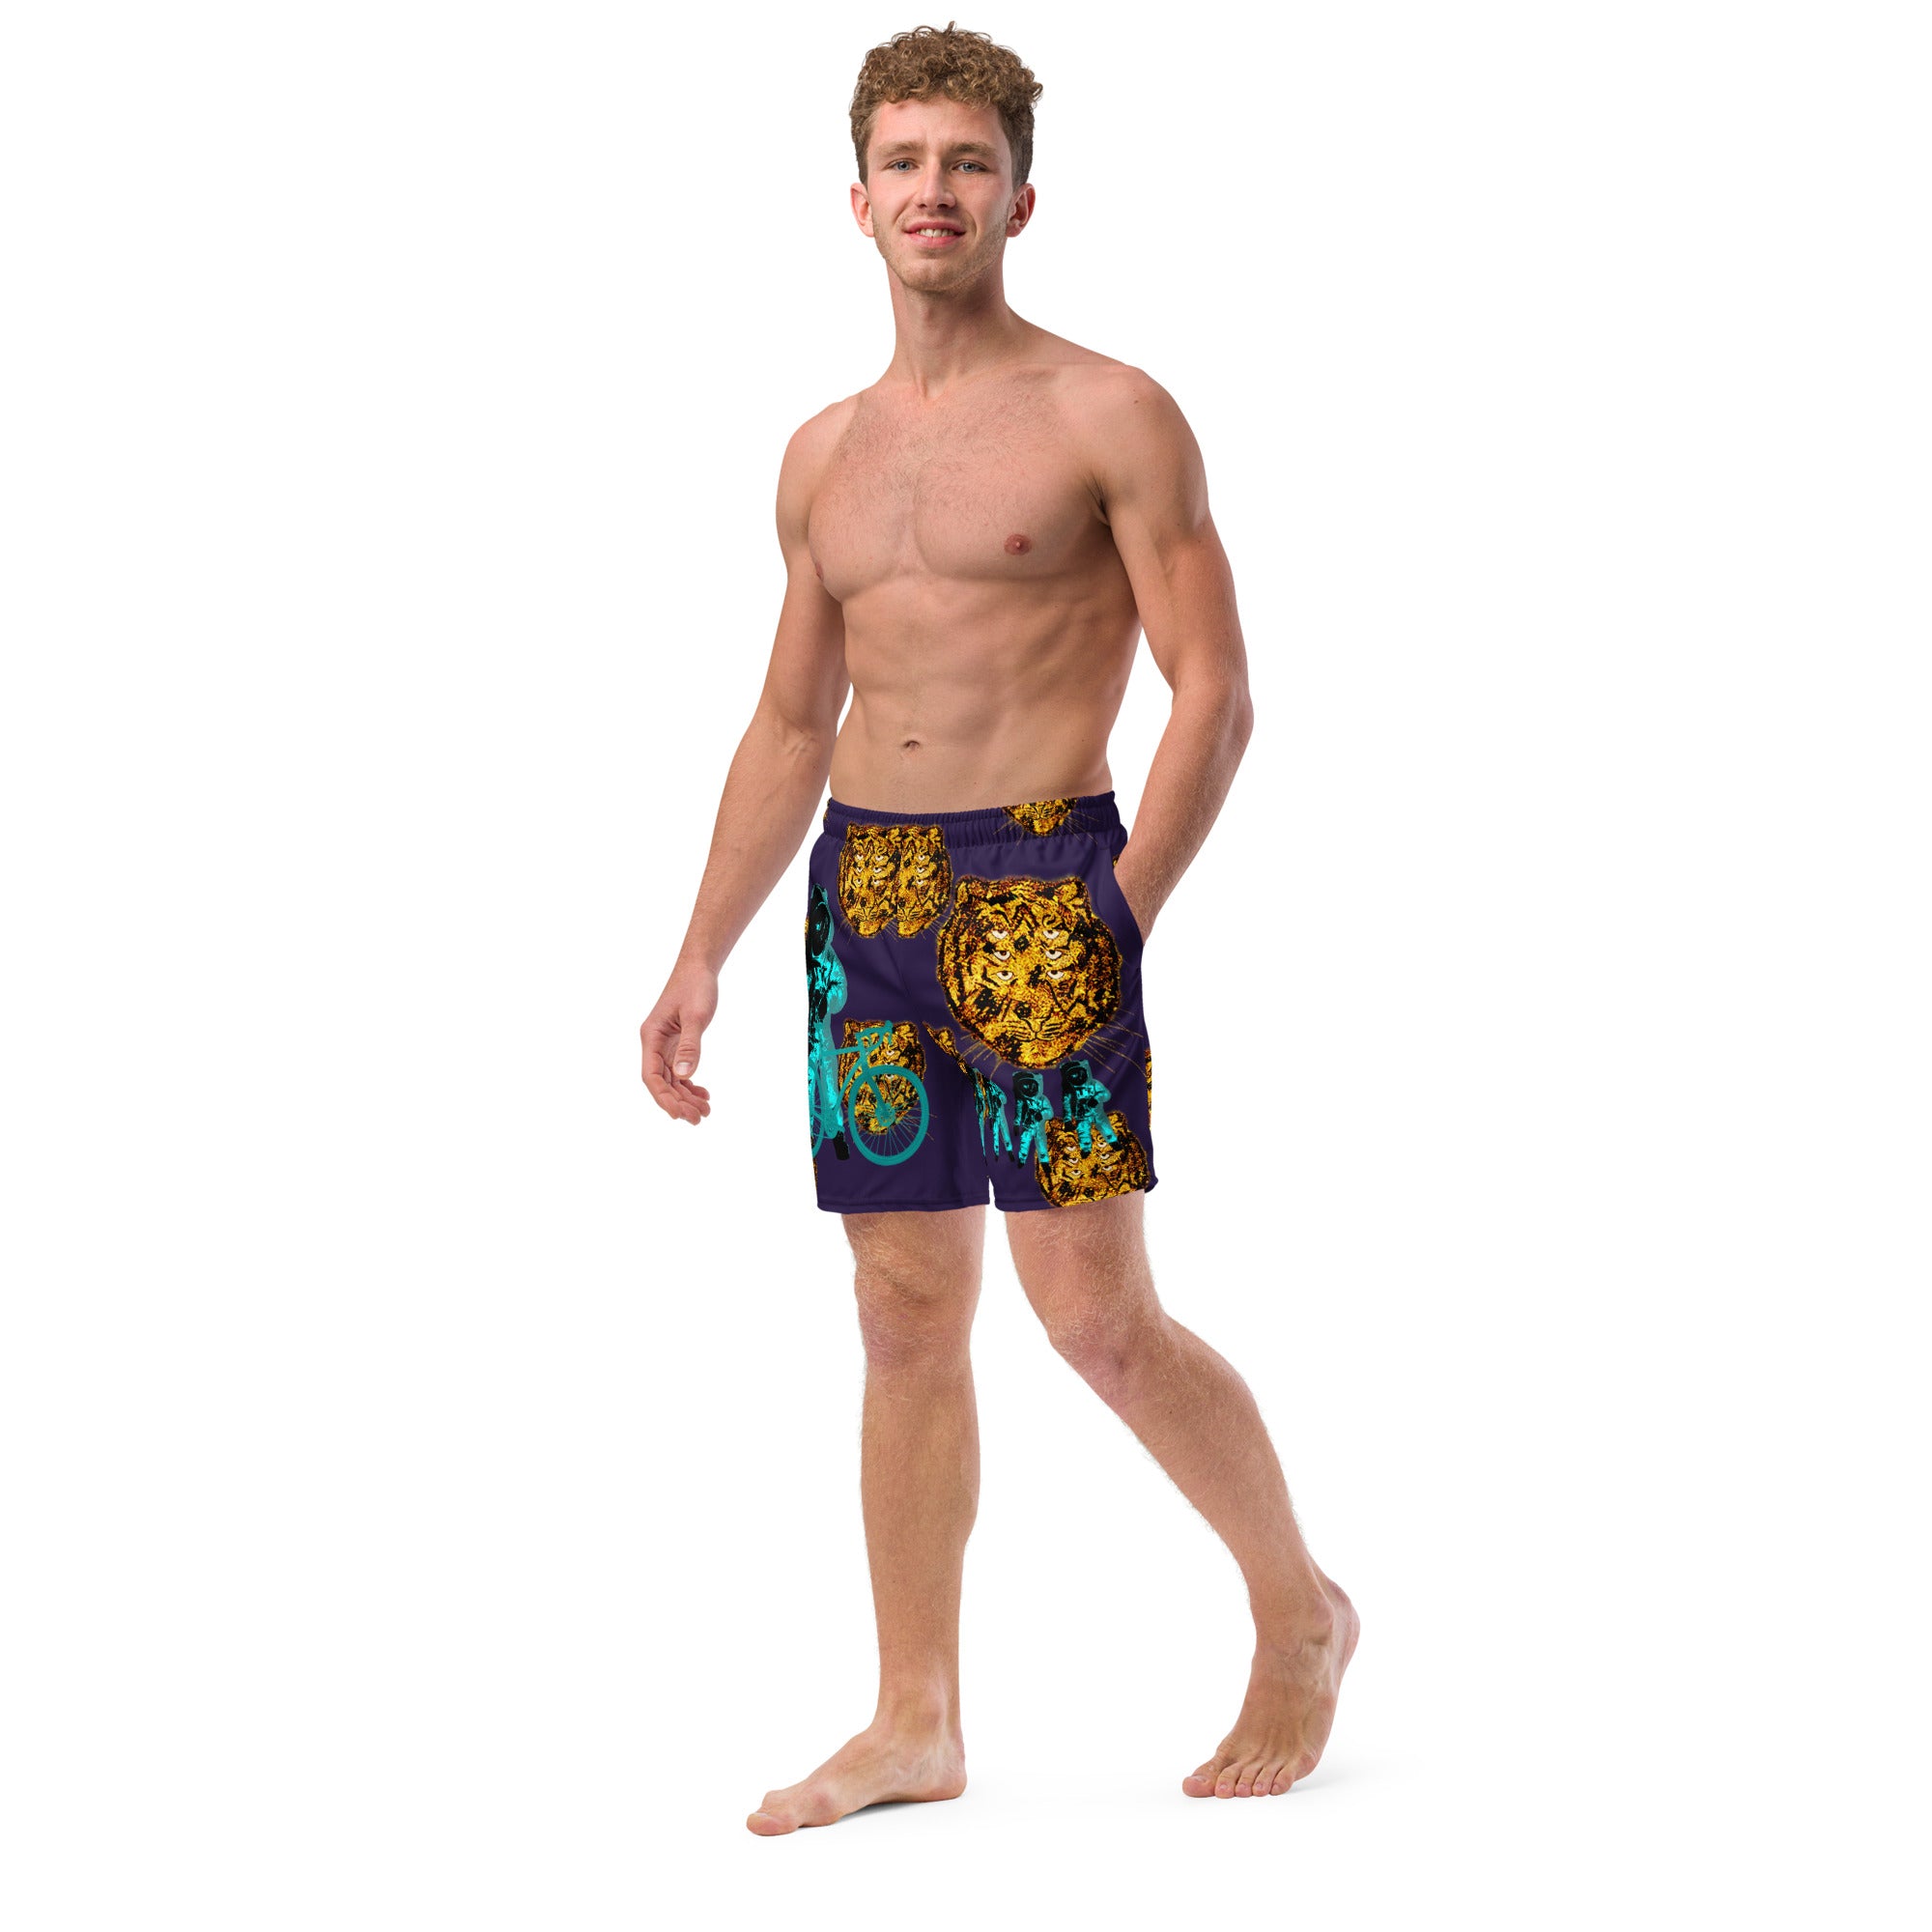 The Jeff 5.0 Men's swim trunks